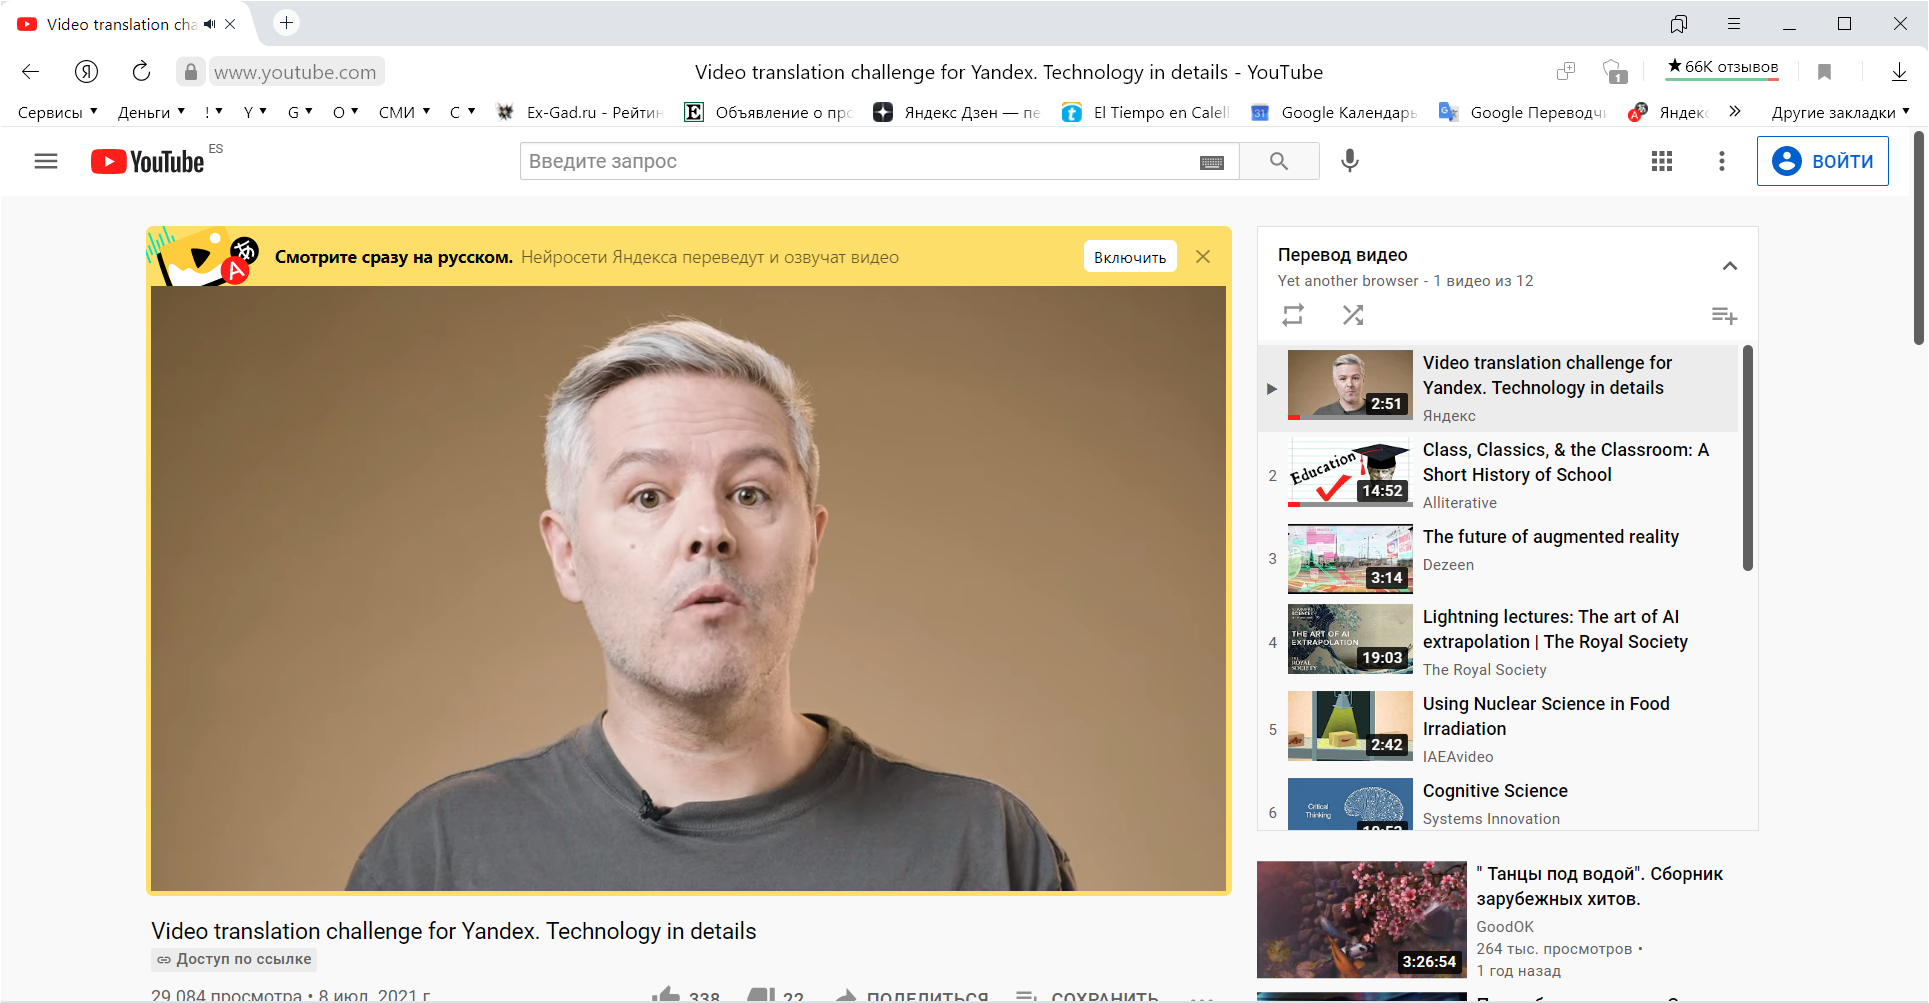 Включи переведи. Яндекс переводчик видео. Яндекс переводит видео. Перевод видео Яндекс. Закадровый перевод Яндекс.